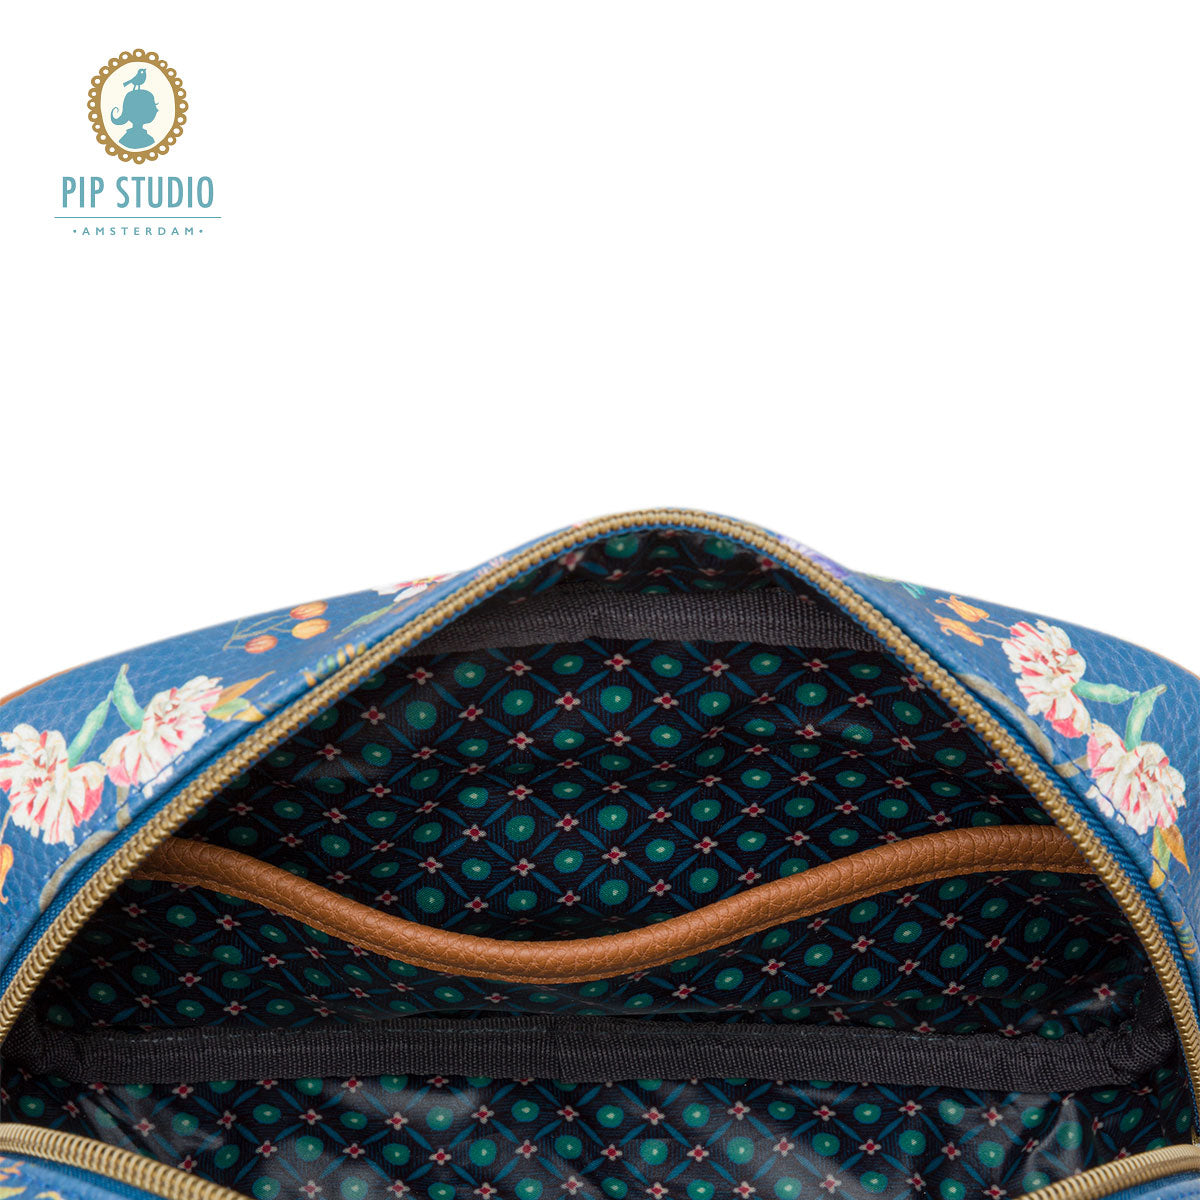 PIP Studio Petites Fleurs Dark Blue Small Square Cosmetic Bag